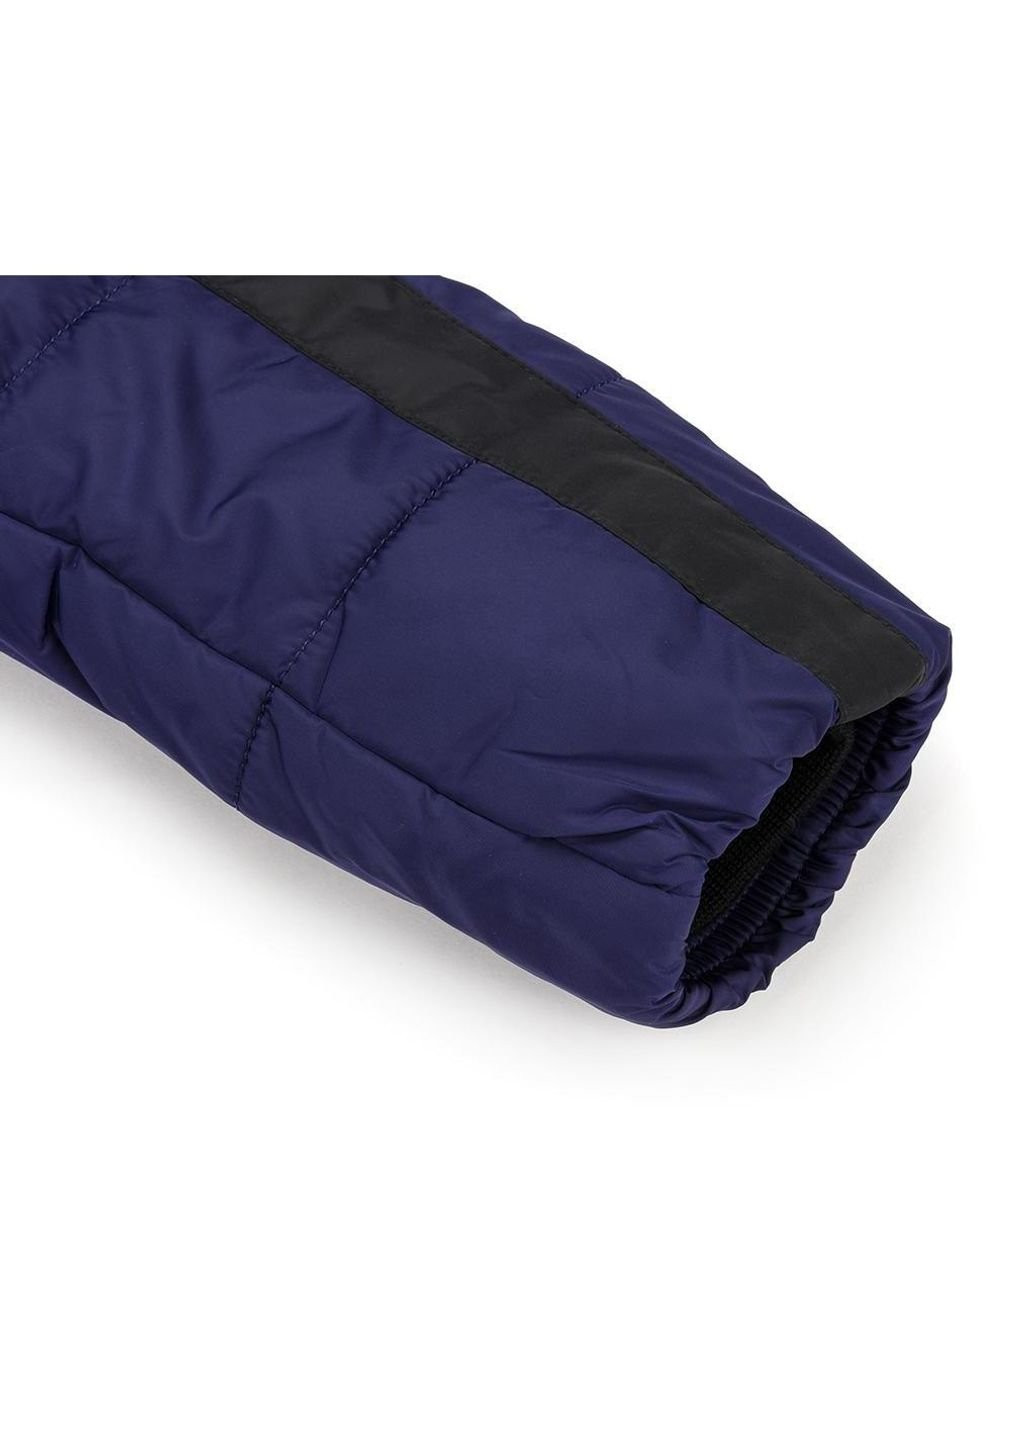 Фіолетова демісезонна куртка з капюшоном (sicmy-g306-134b-blue) Snowimage